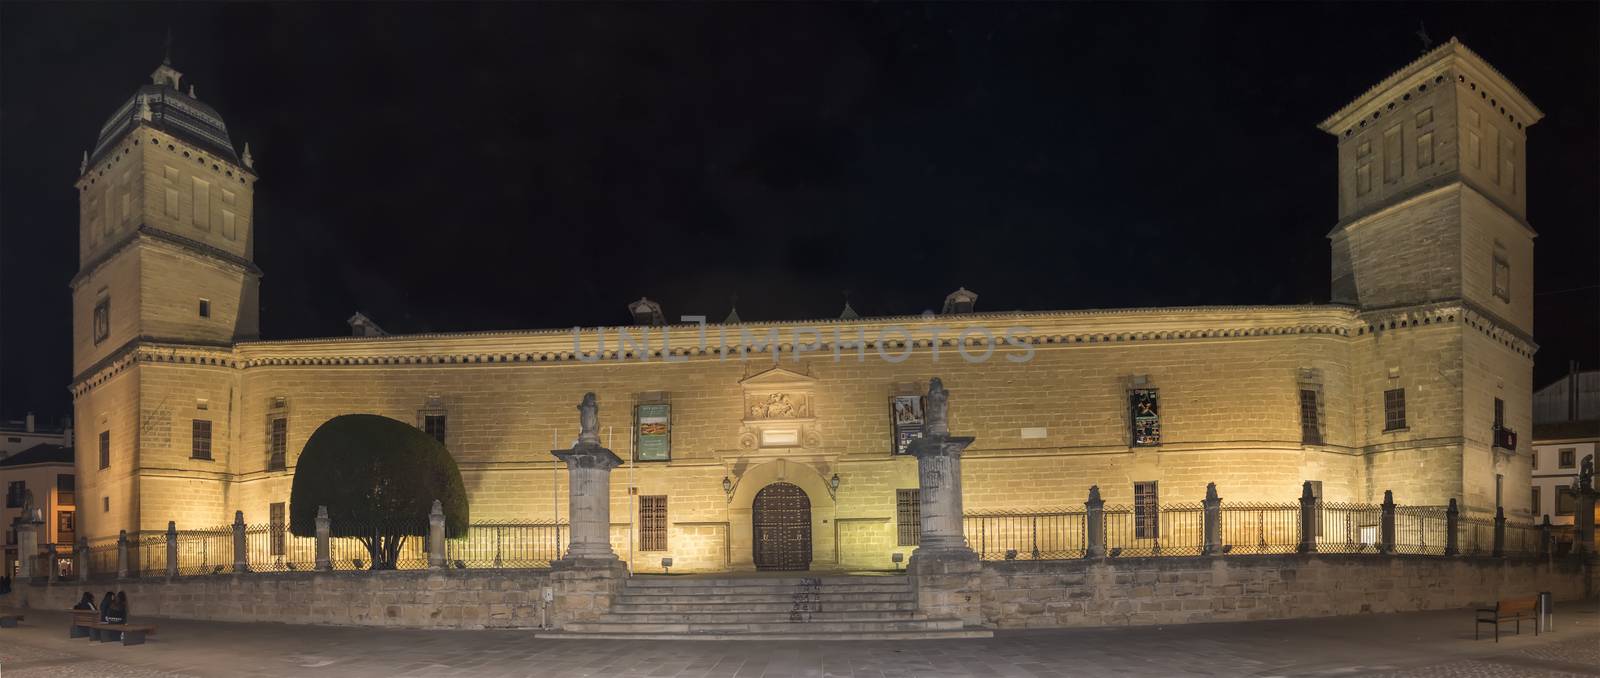 Hospital de Santiago at night, Ubeda, Jaen, Spain by max8xam